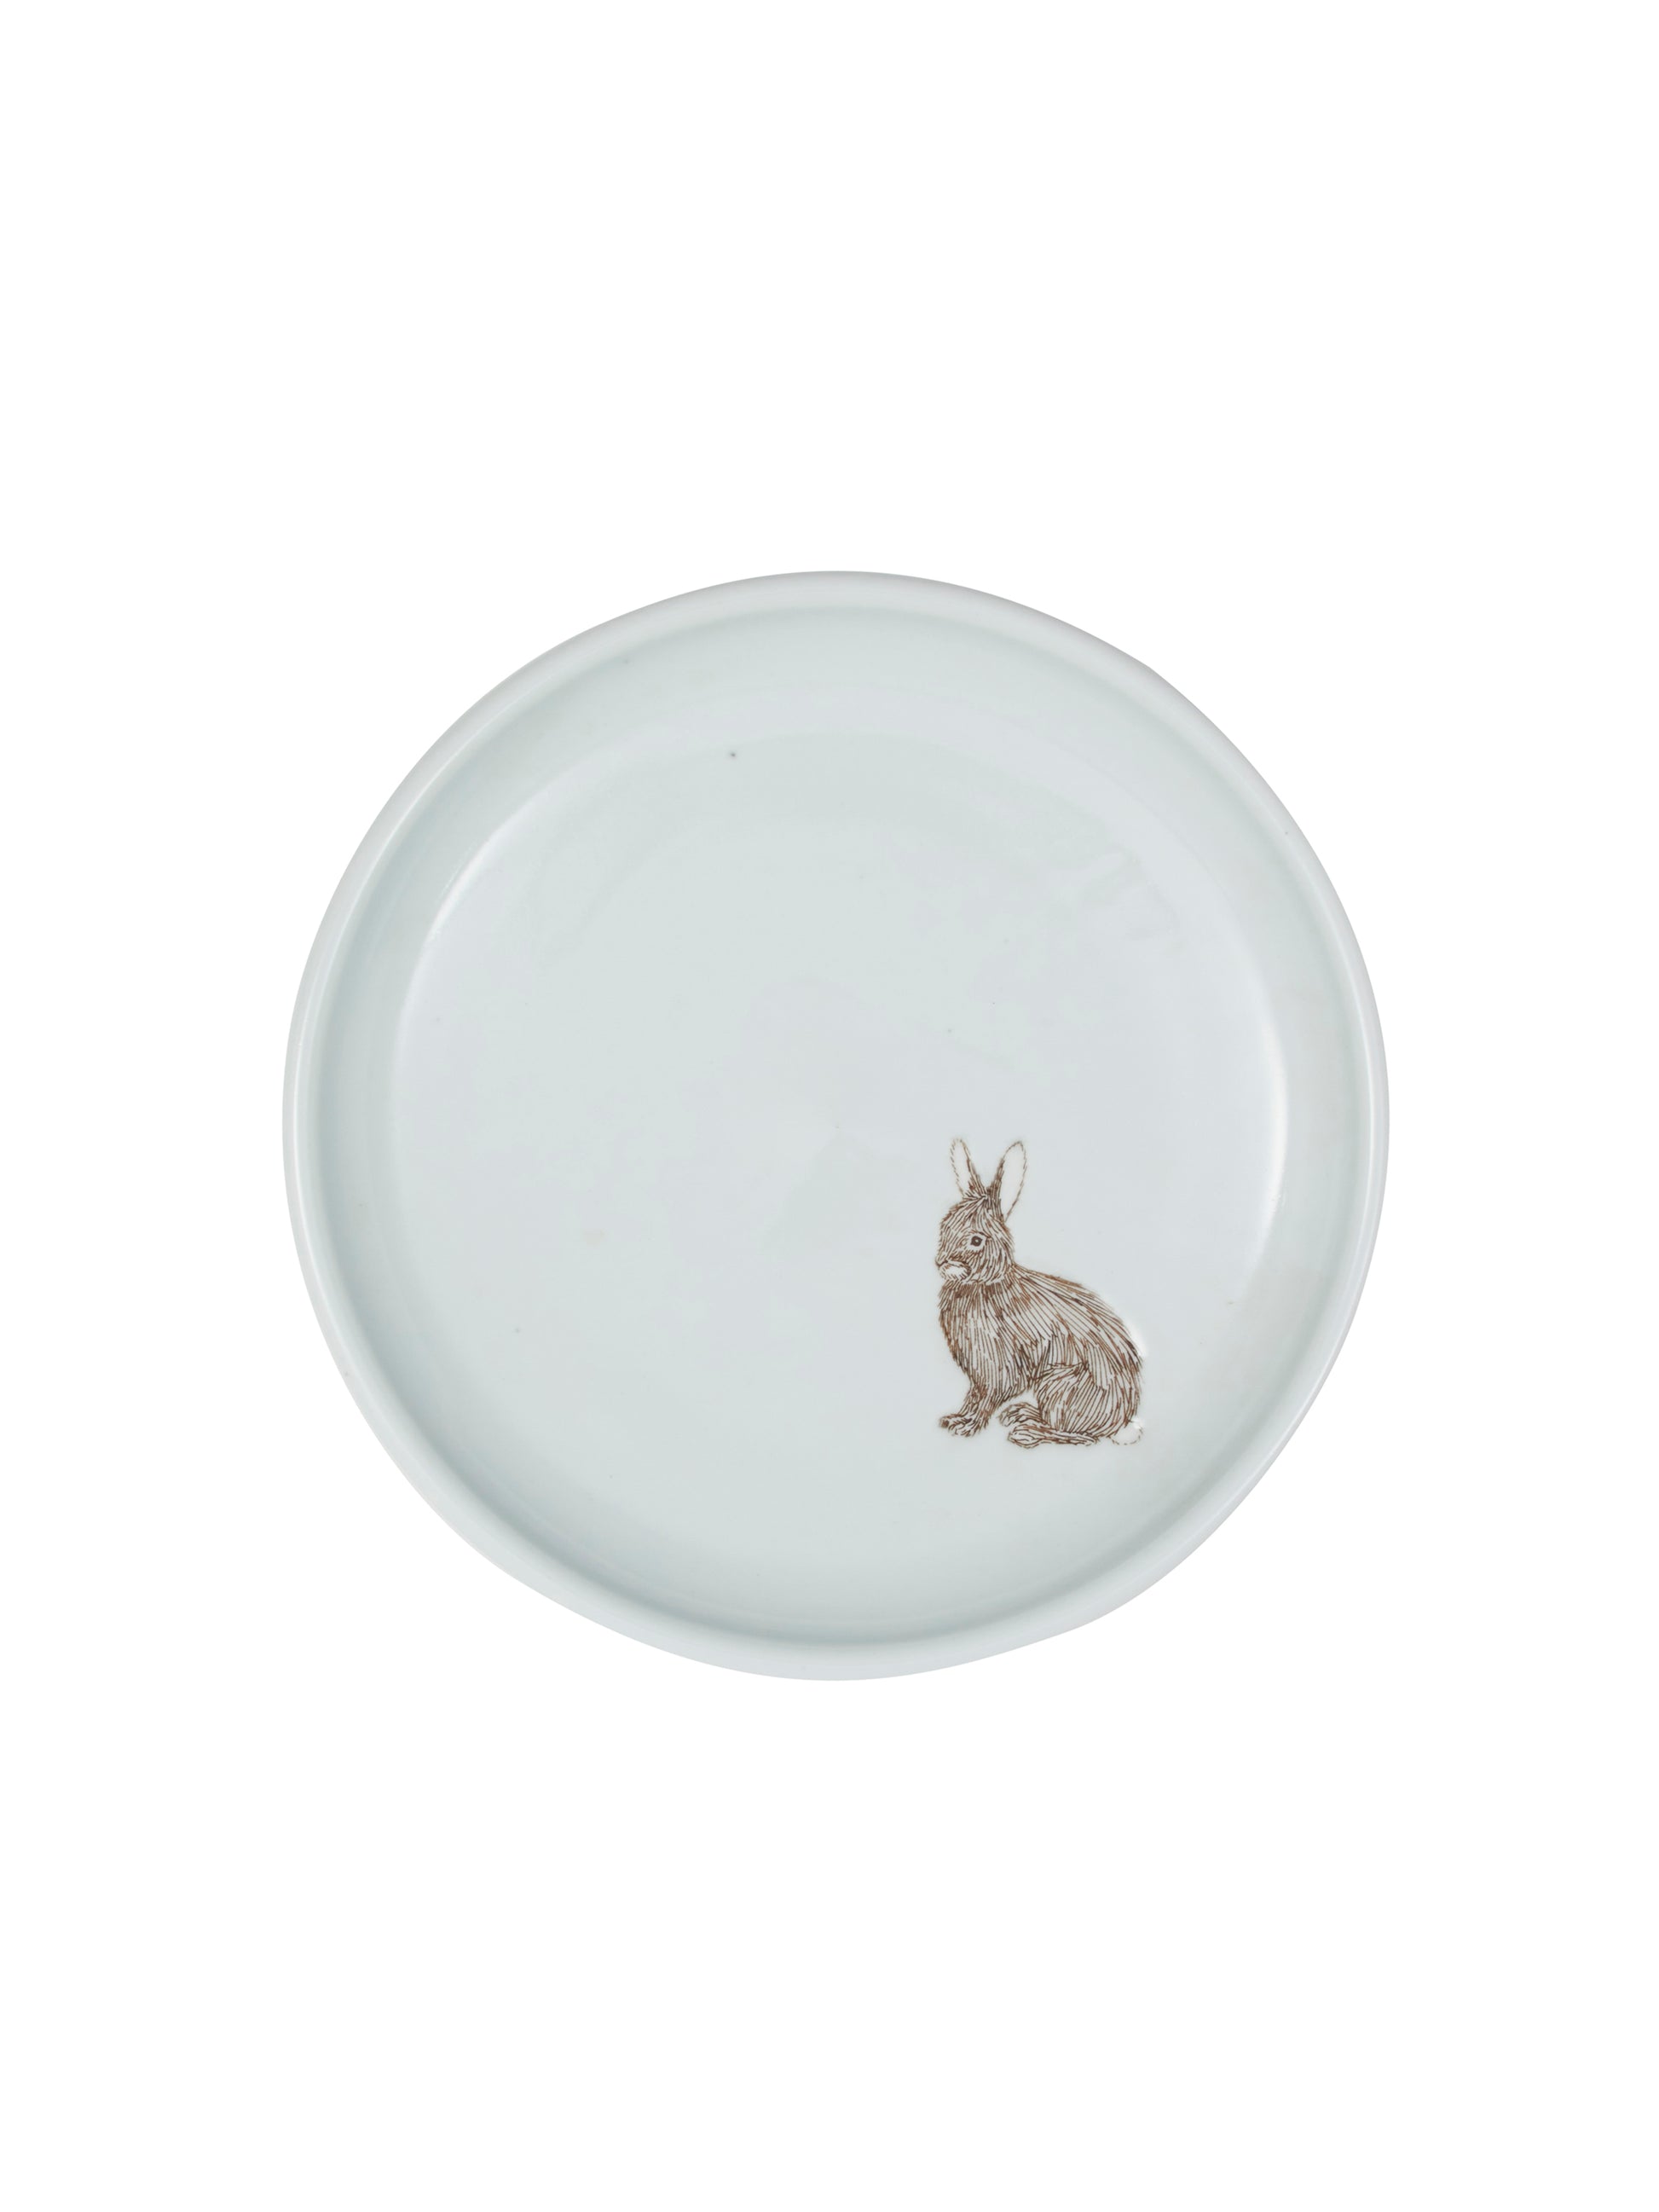 Rabbit Ceramic Plate 10"  Weston Table